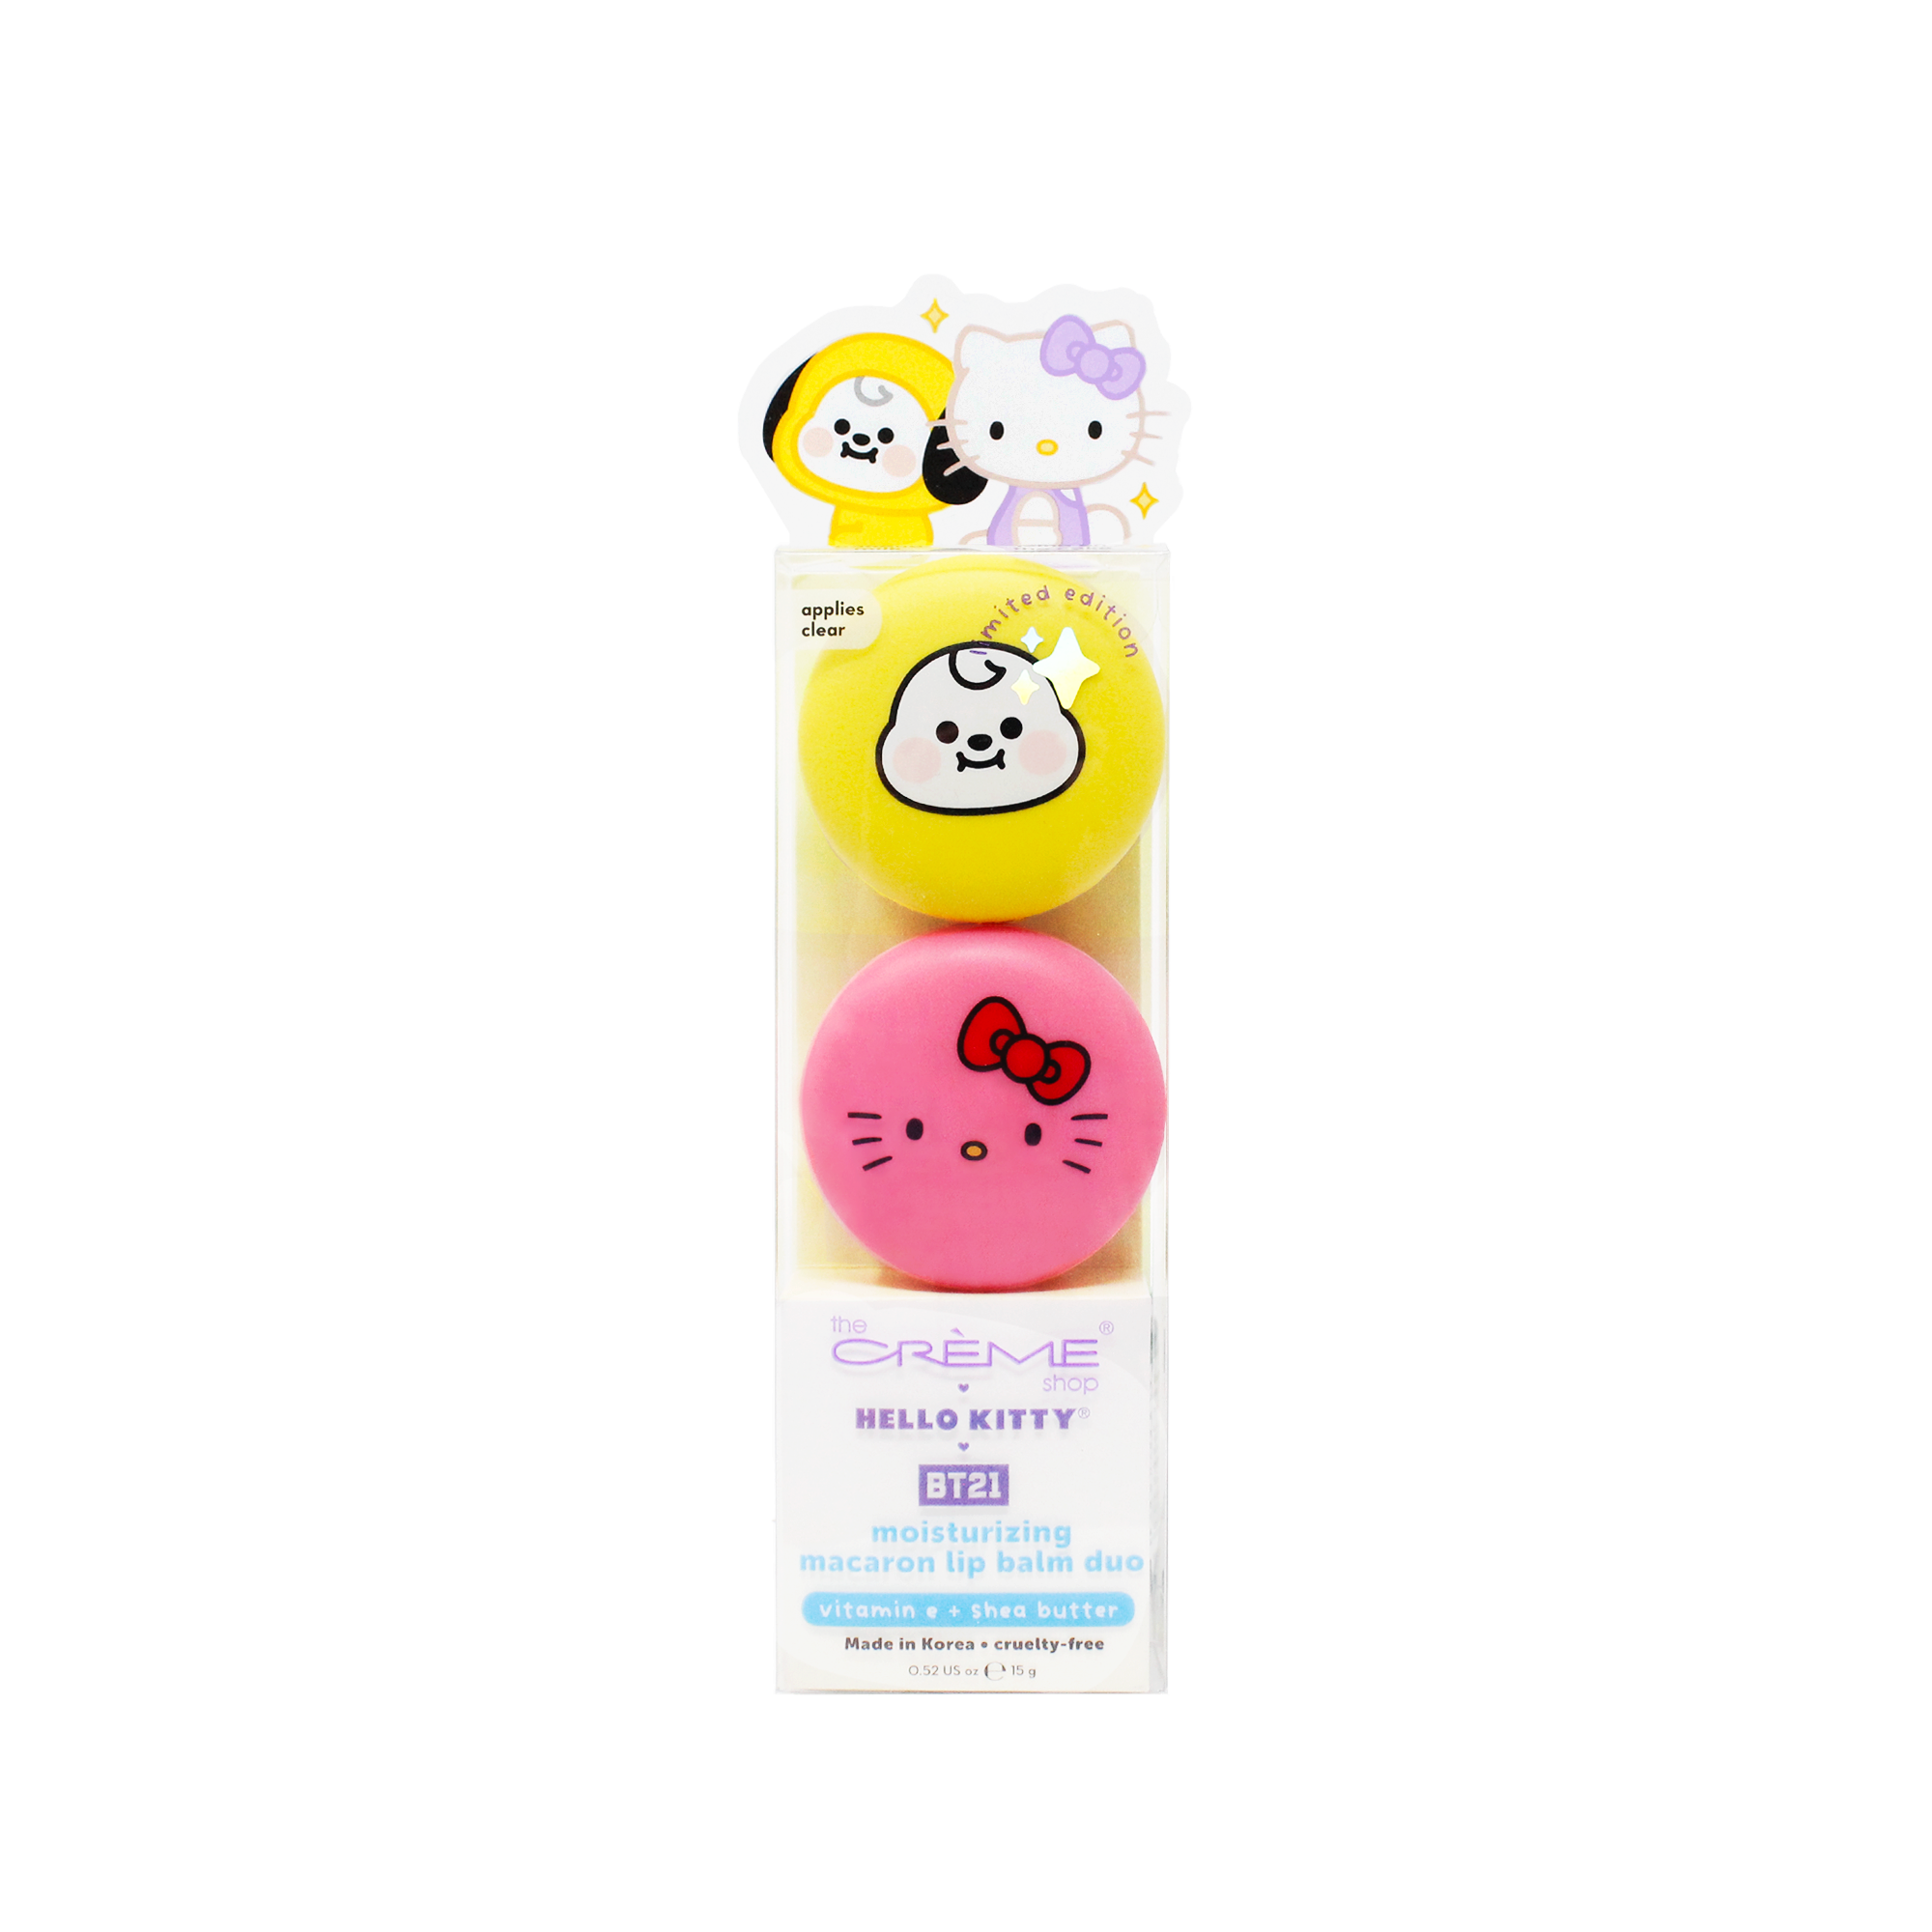 Hello Kitty & BT21 CHIMMY Moisturizing Macaron Lip Balm Duo Beauty The Crème Shop   